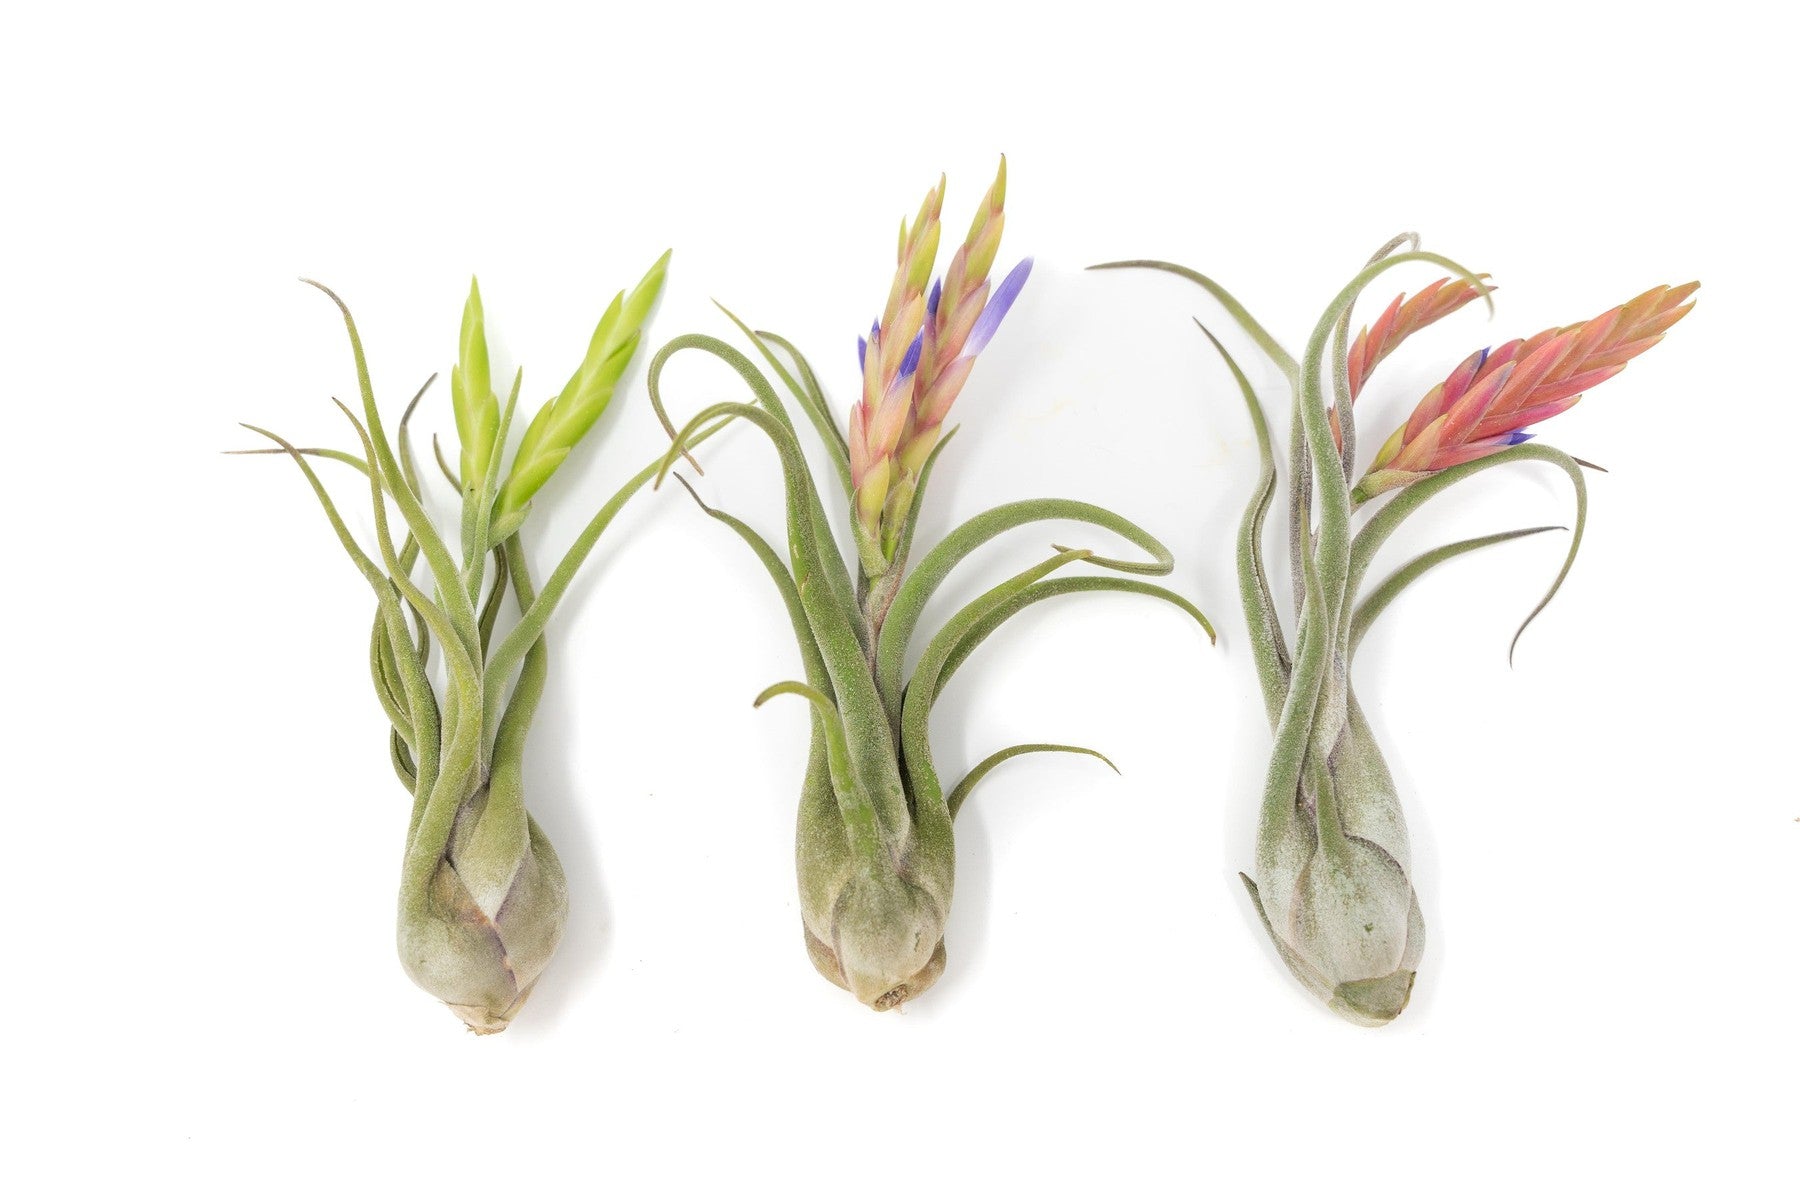 SALE - Tillandsia Caput Medusae Air Plants - Set of 10 or 20 - 70% Off-airplant-The Succulent Source